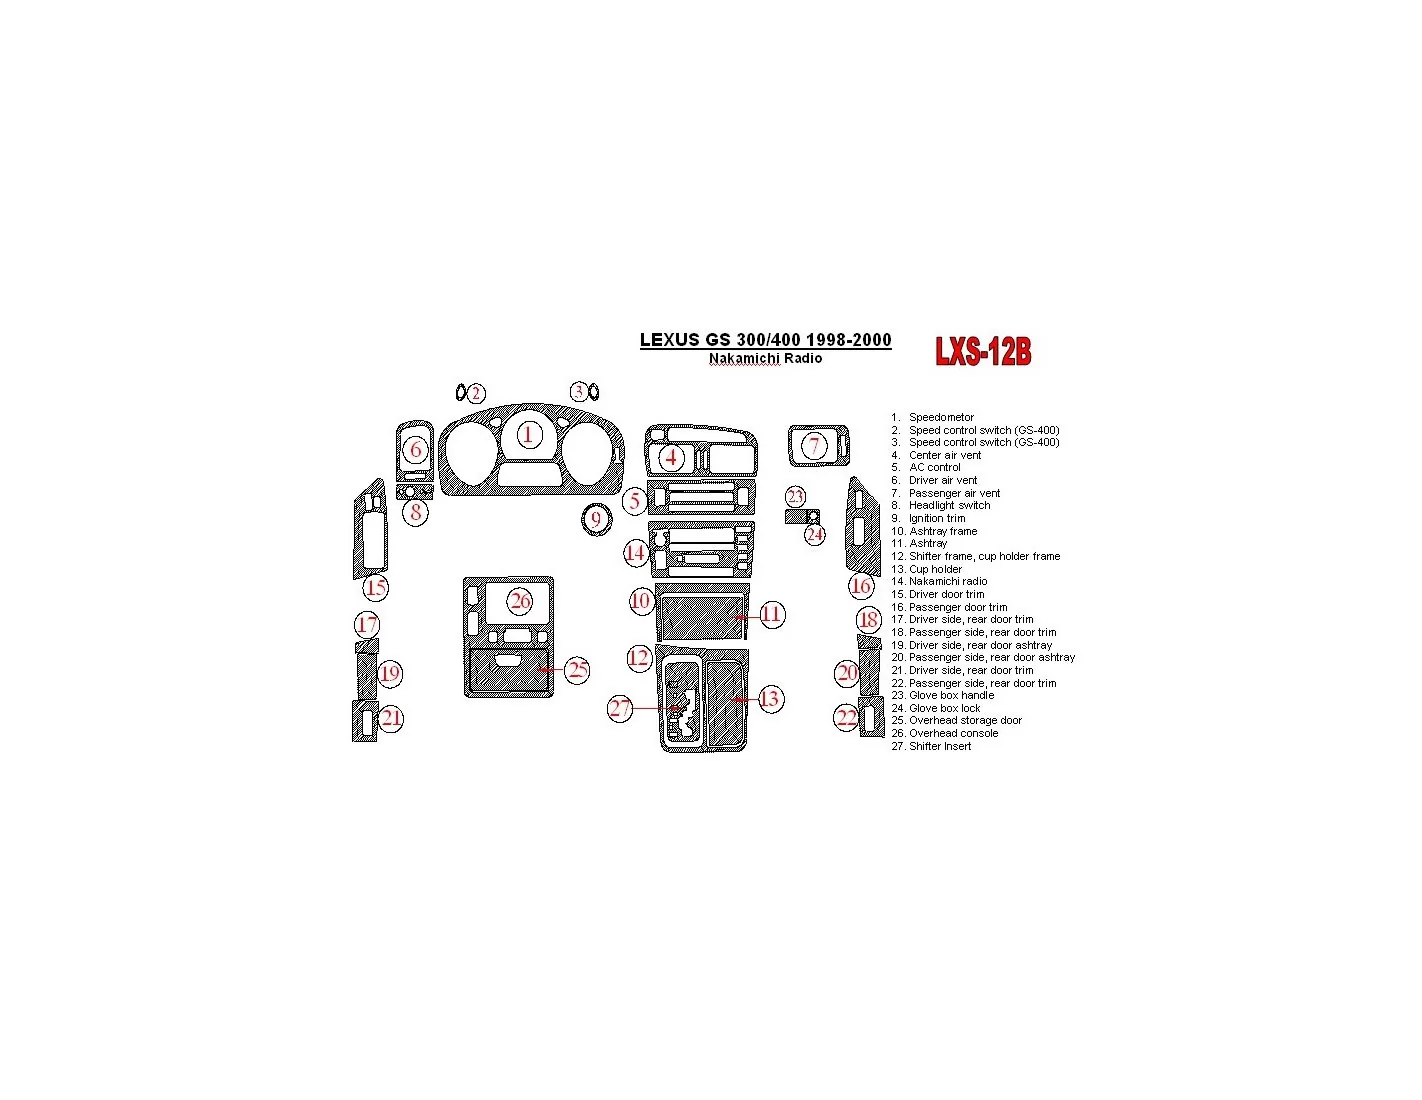 Lexus GS 1998-2000 Nakamichi Radio, OEM Compliance, 26 Parts set BD Interieur Dashboard Bekleding Volhouder